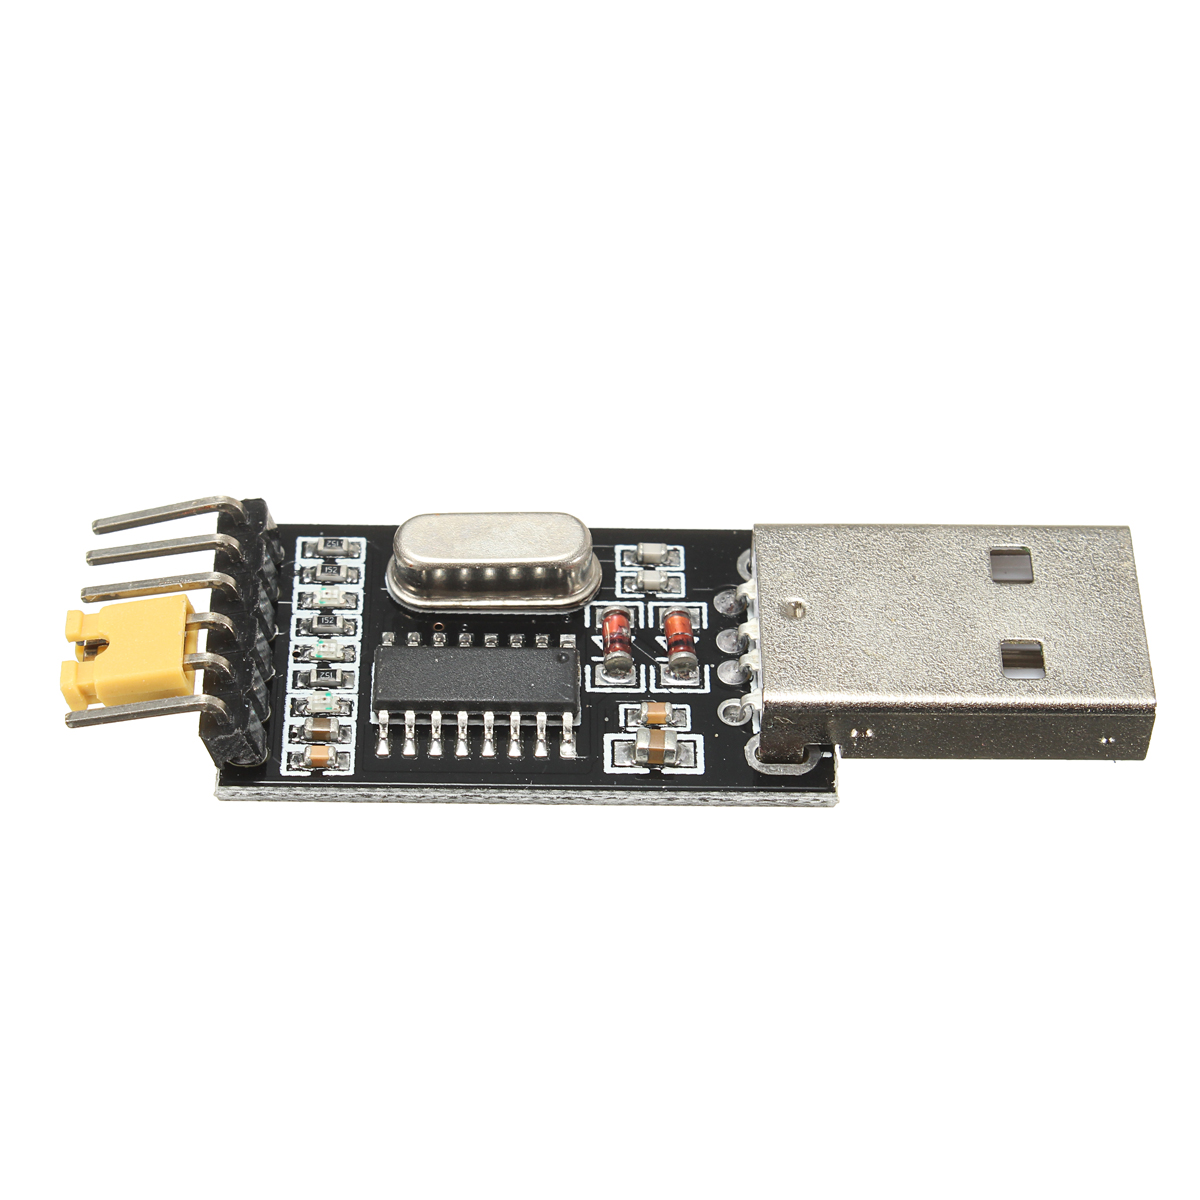 10pcs-33V-5V-USB-to-TTL-Converter-CH340G-UART-Serial-Adapter-Module-STC-1314967-5